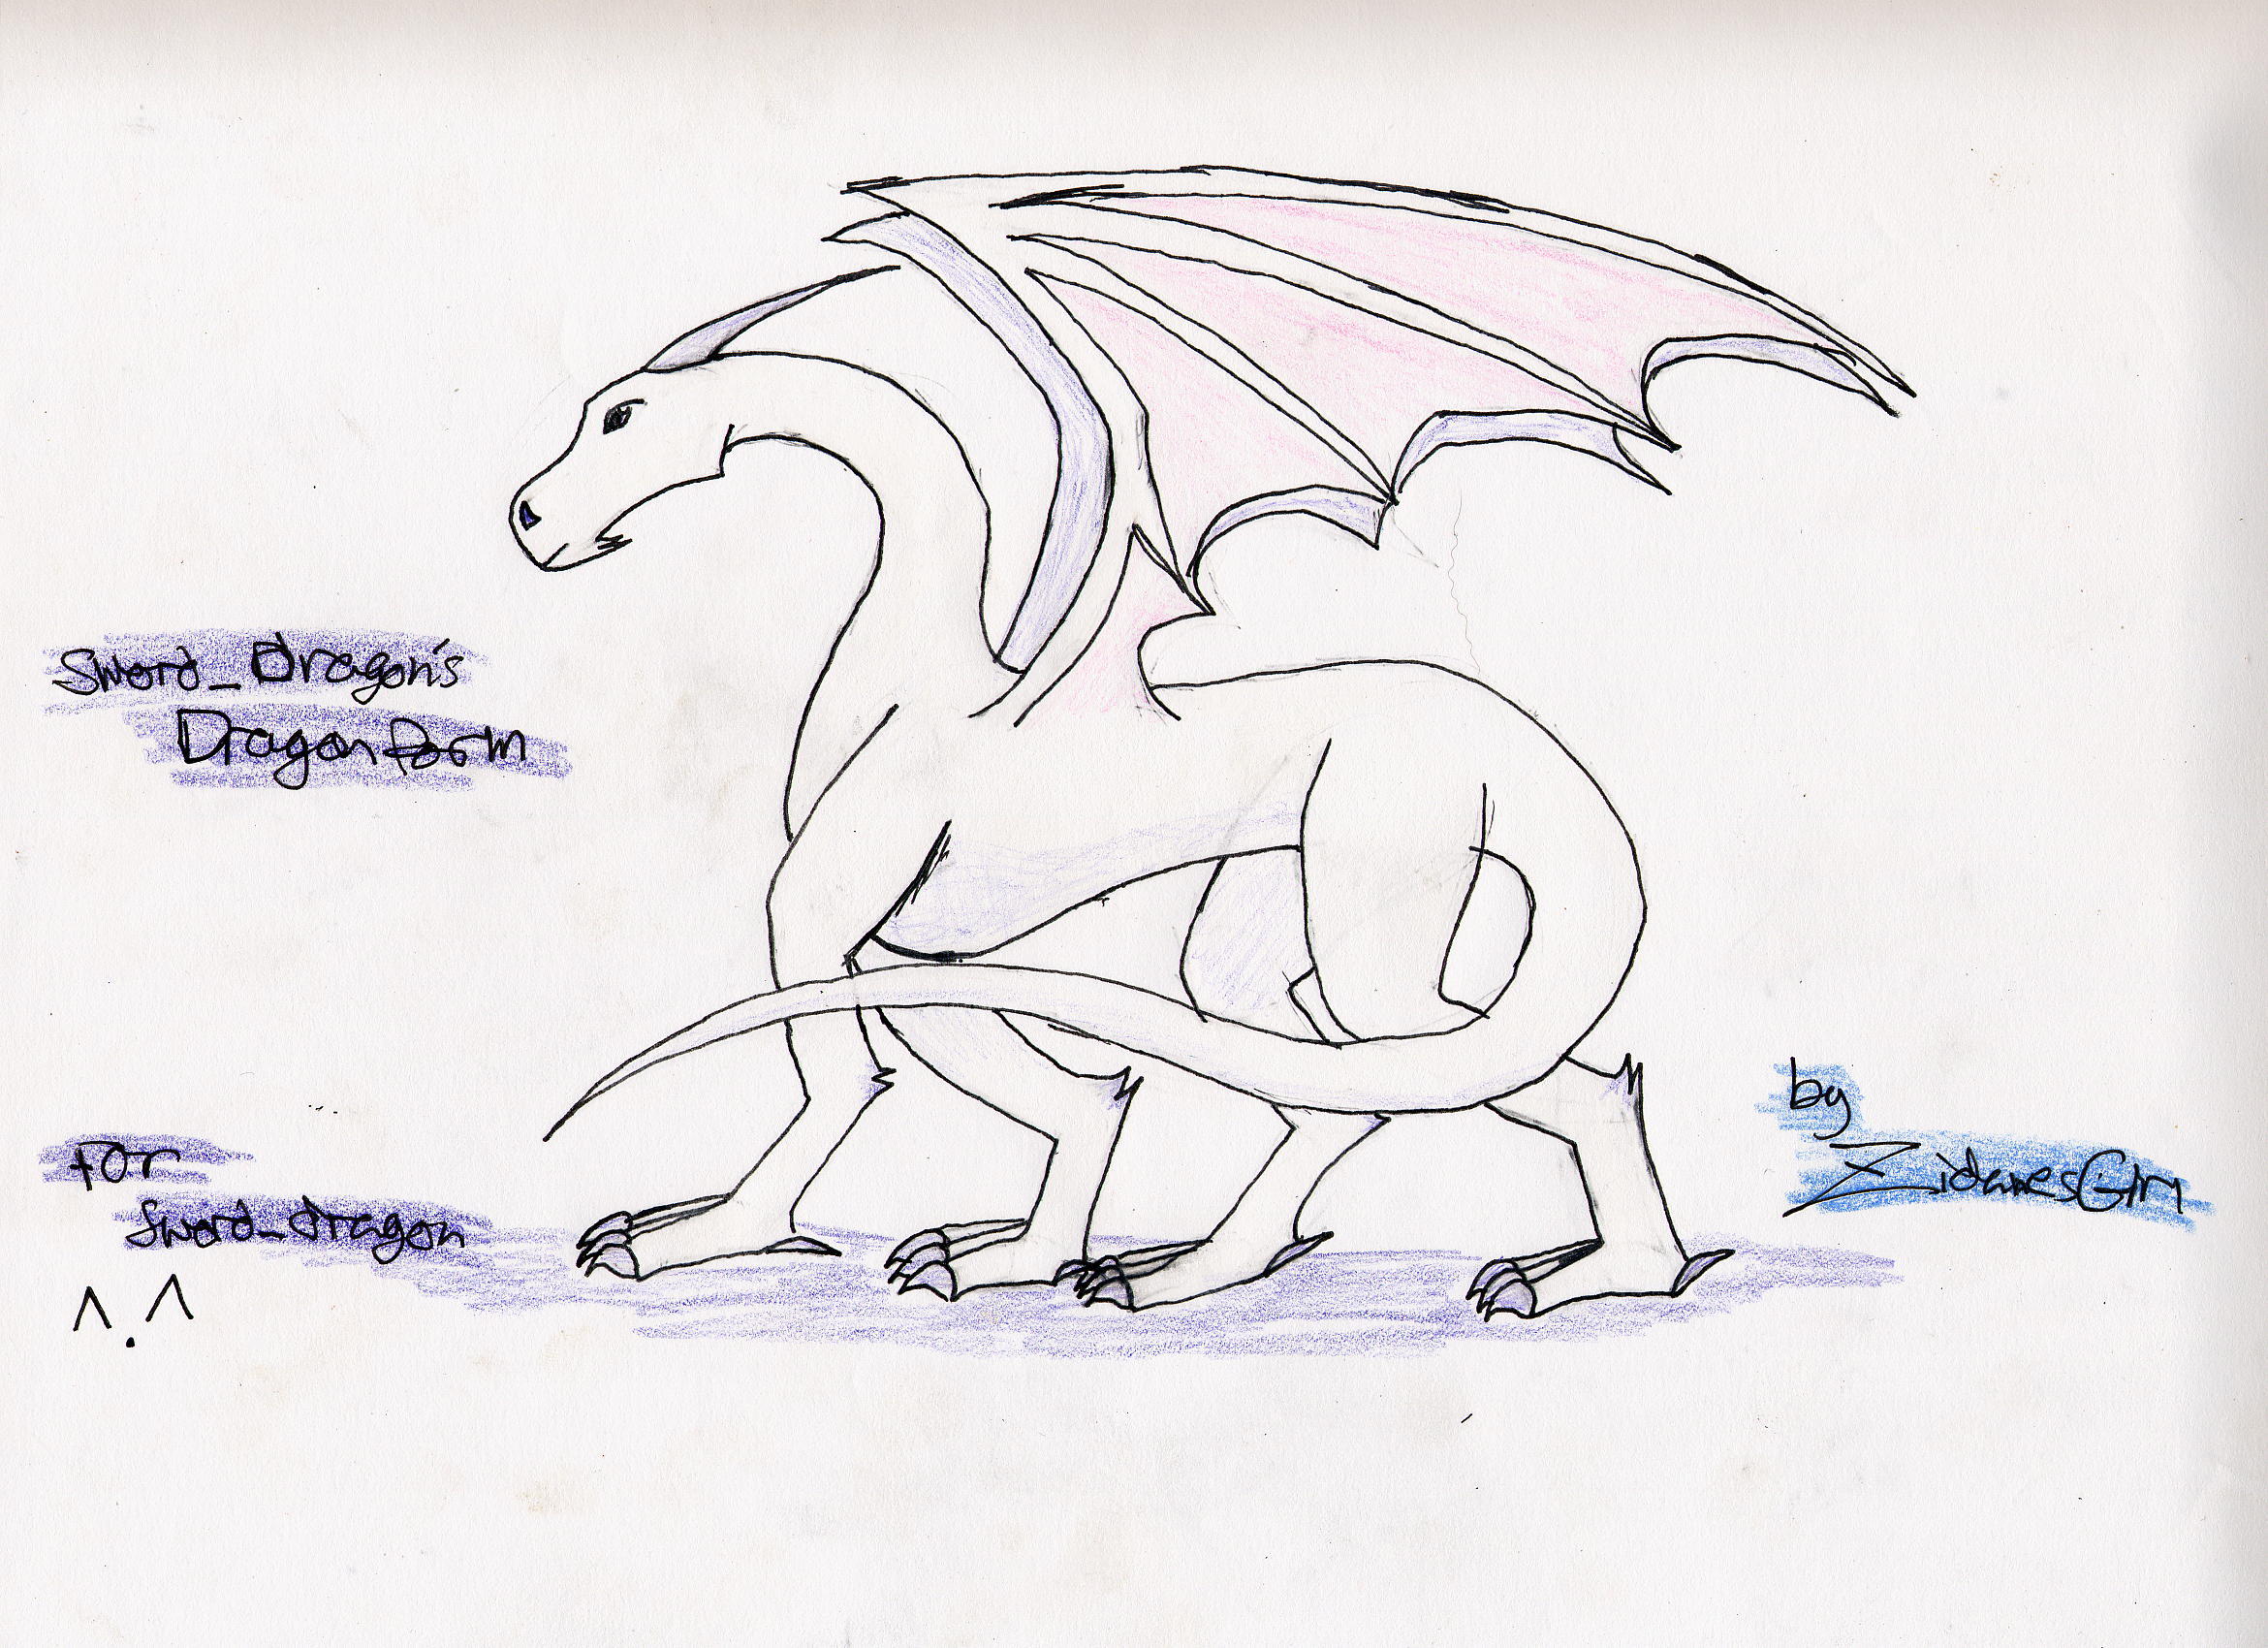 sword_dragon's dragon form by ZidanesGirl